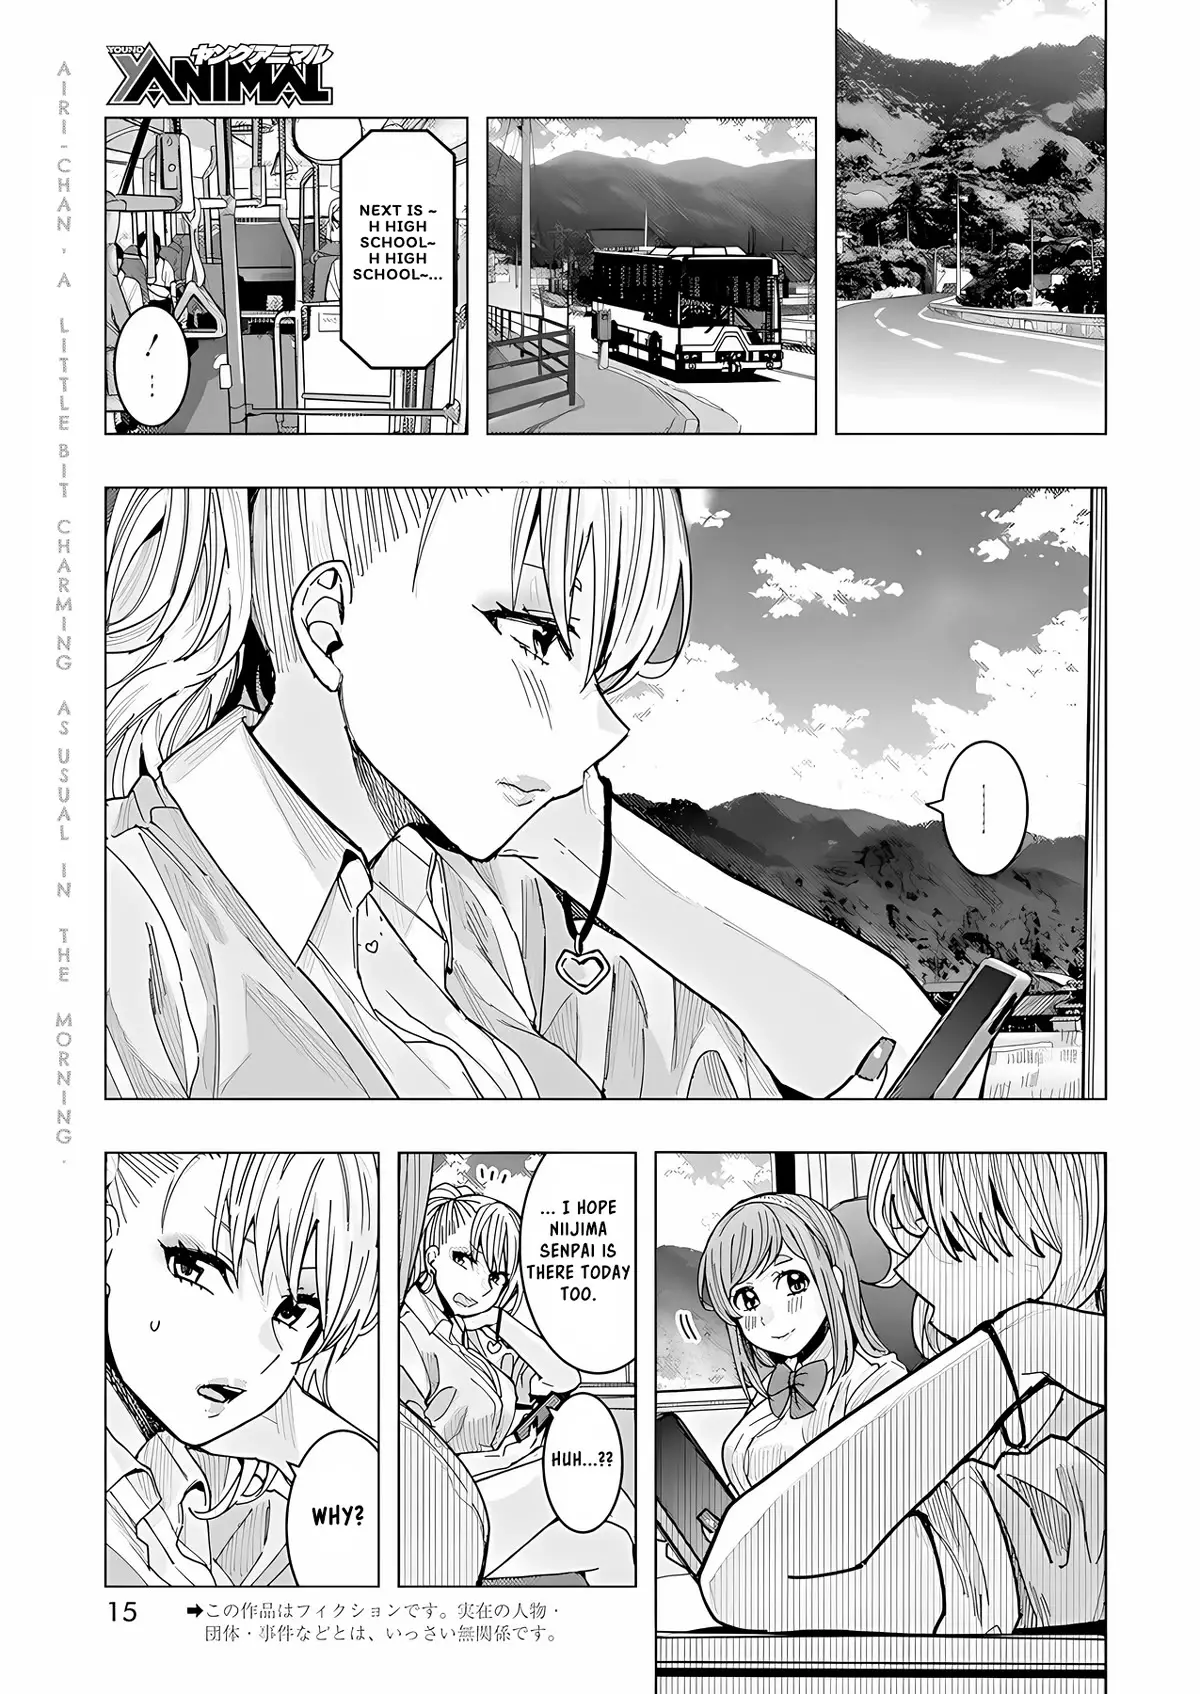 "nobukuni-San" Does She Like Me? - 25 page 3-1b5e41c7